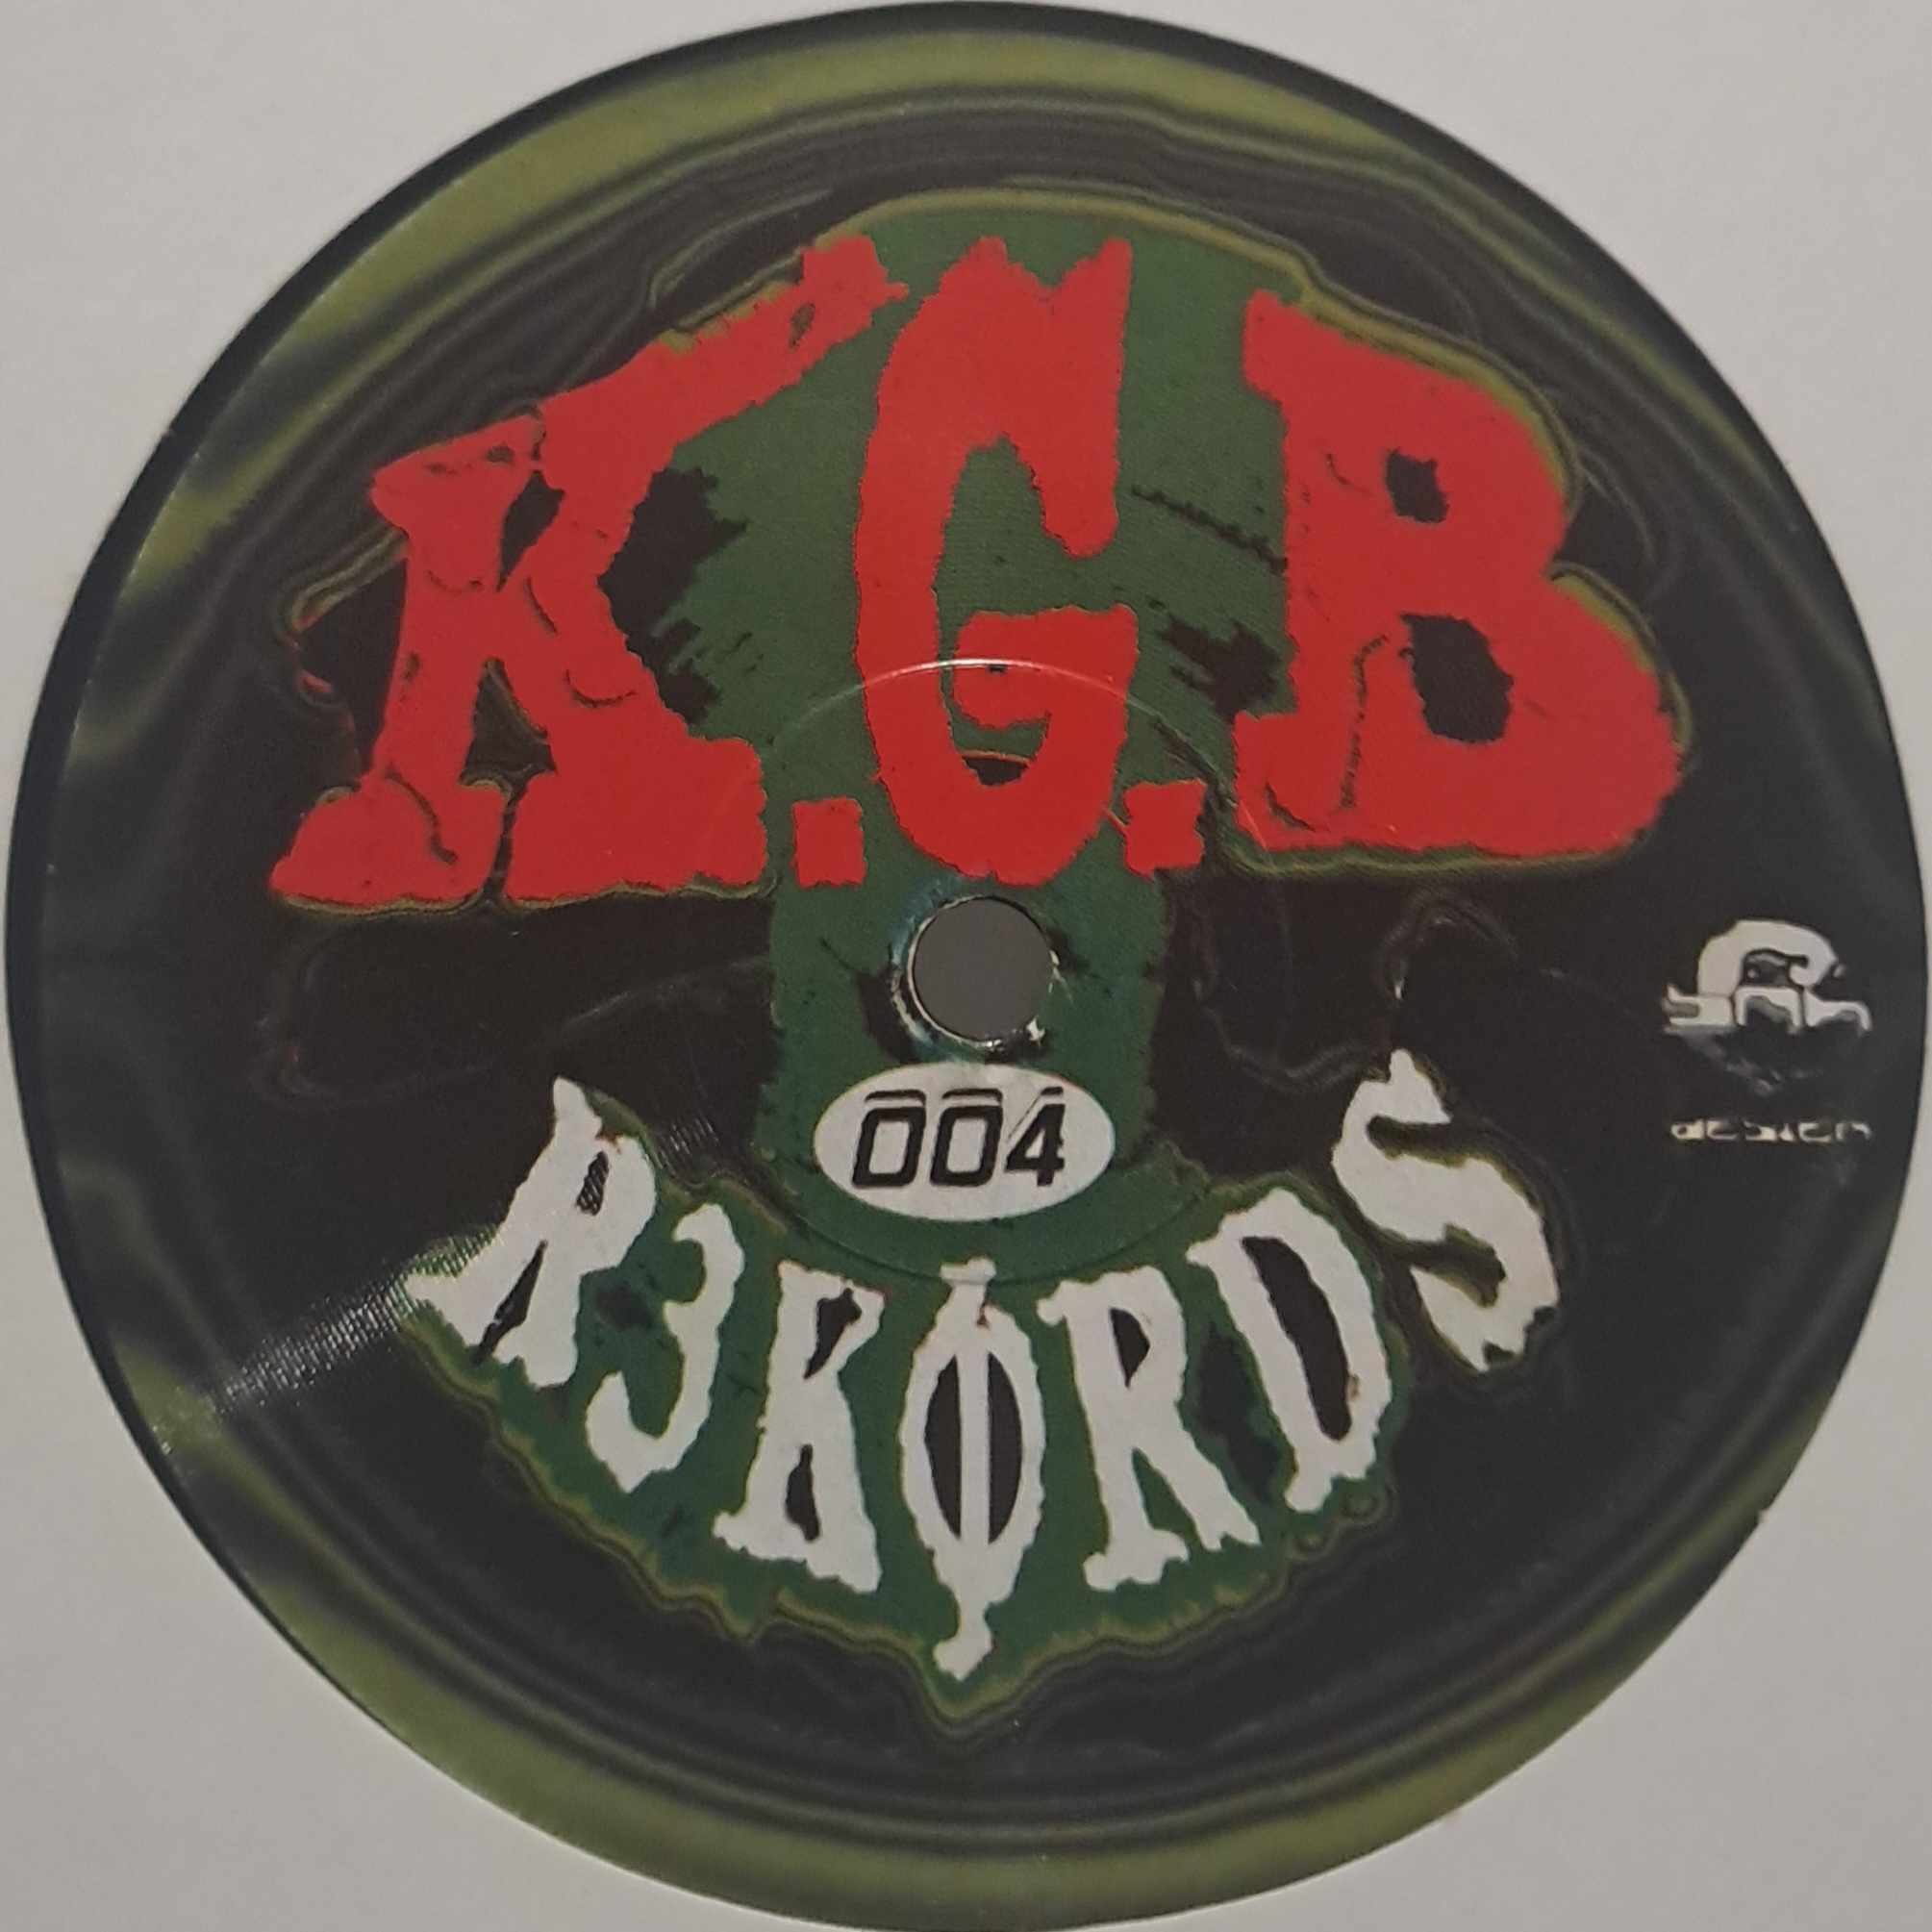 KGB 04 - vinyle freetekno